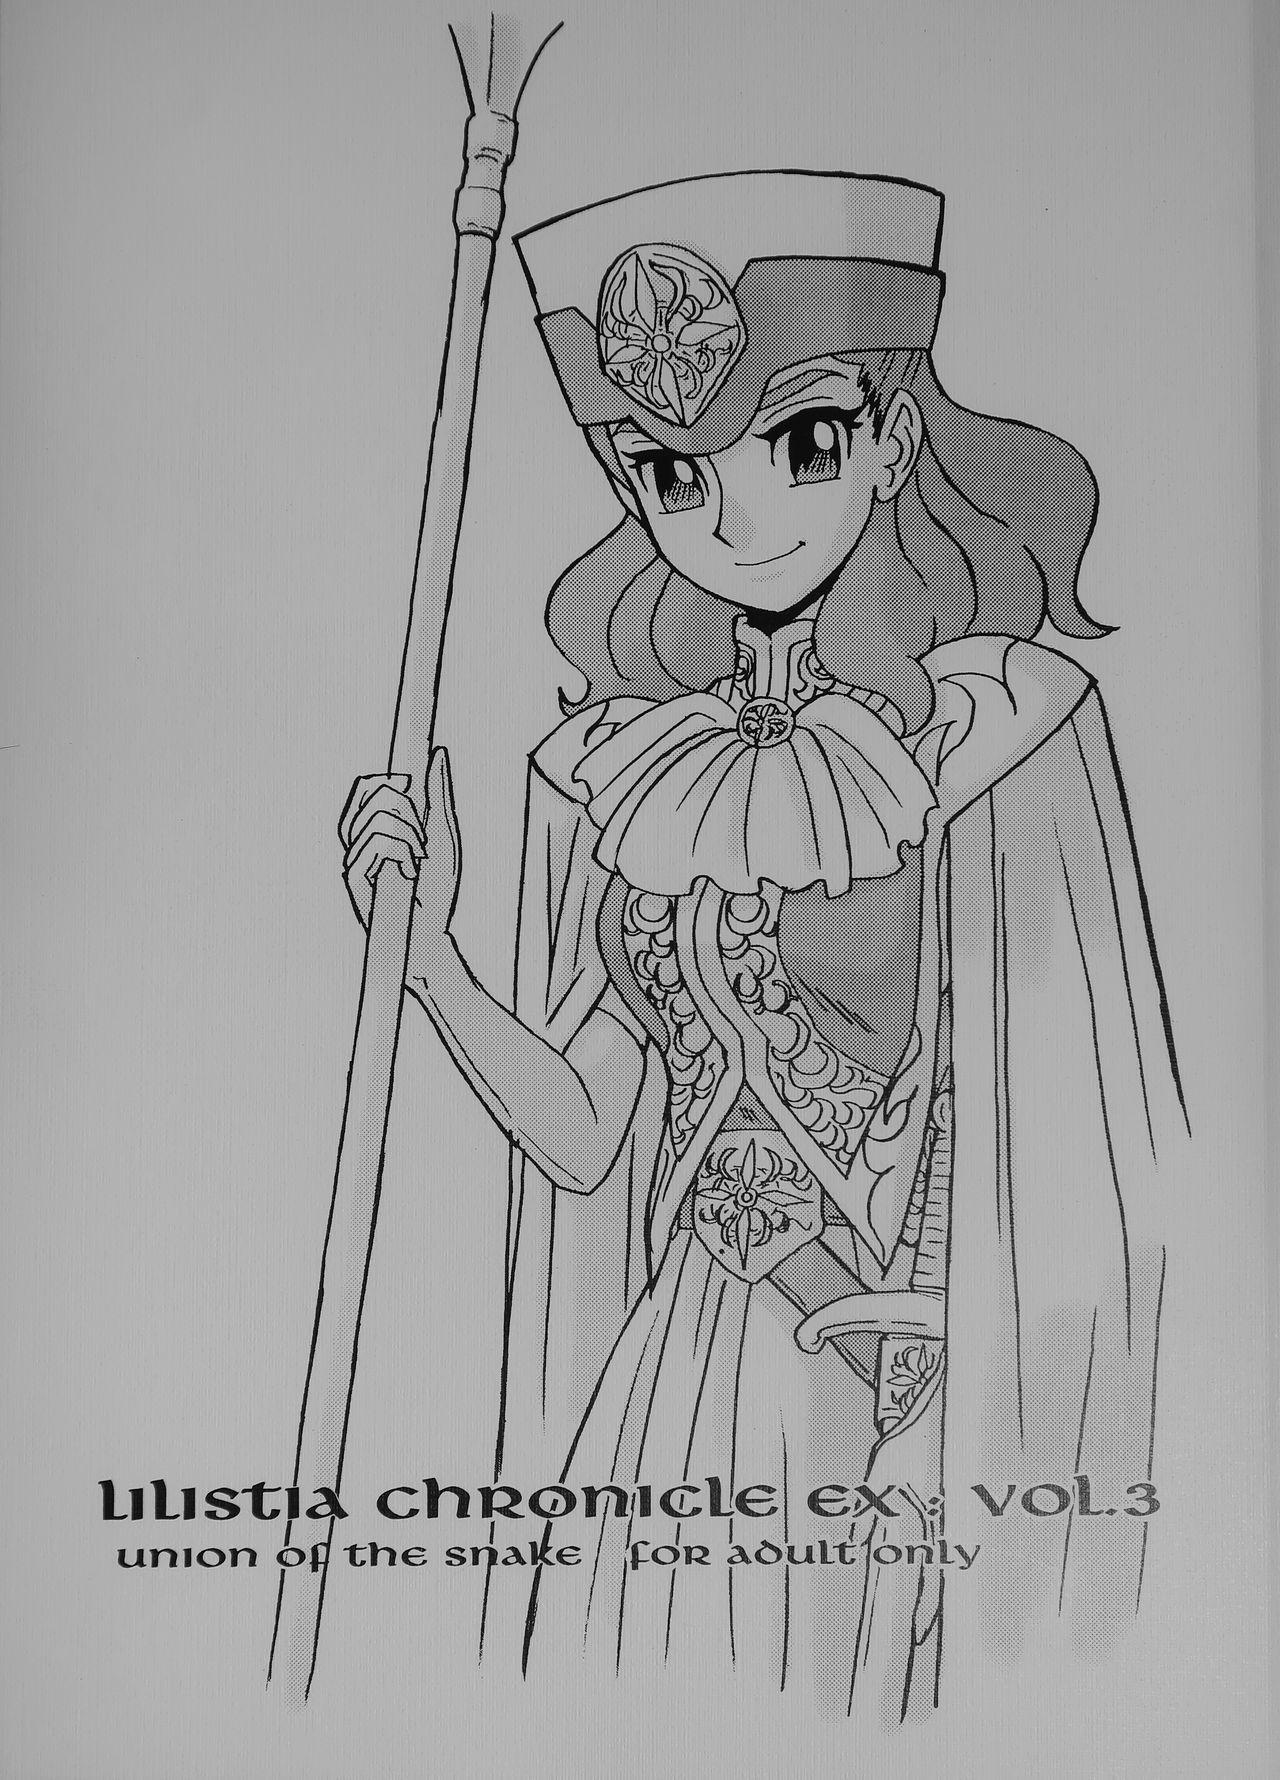 LILISTIA CHRONICLE EX : Vol.3 0